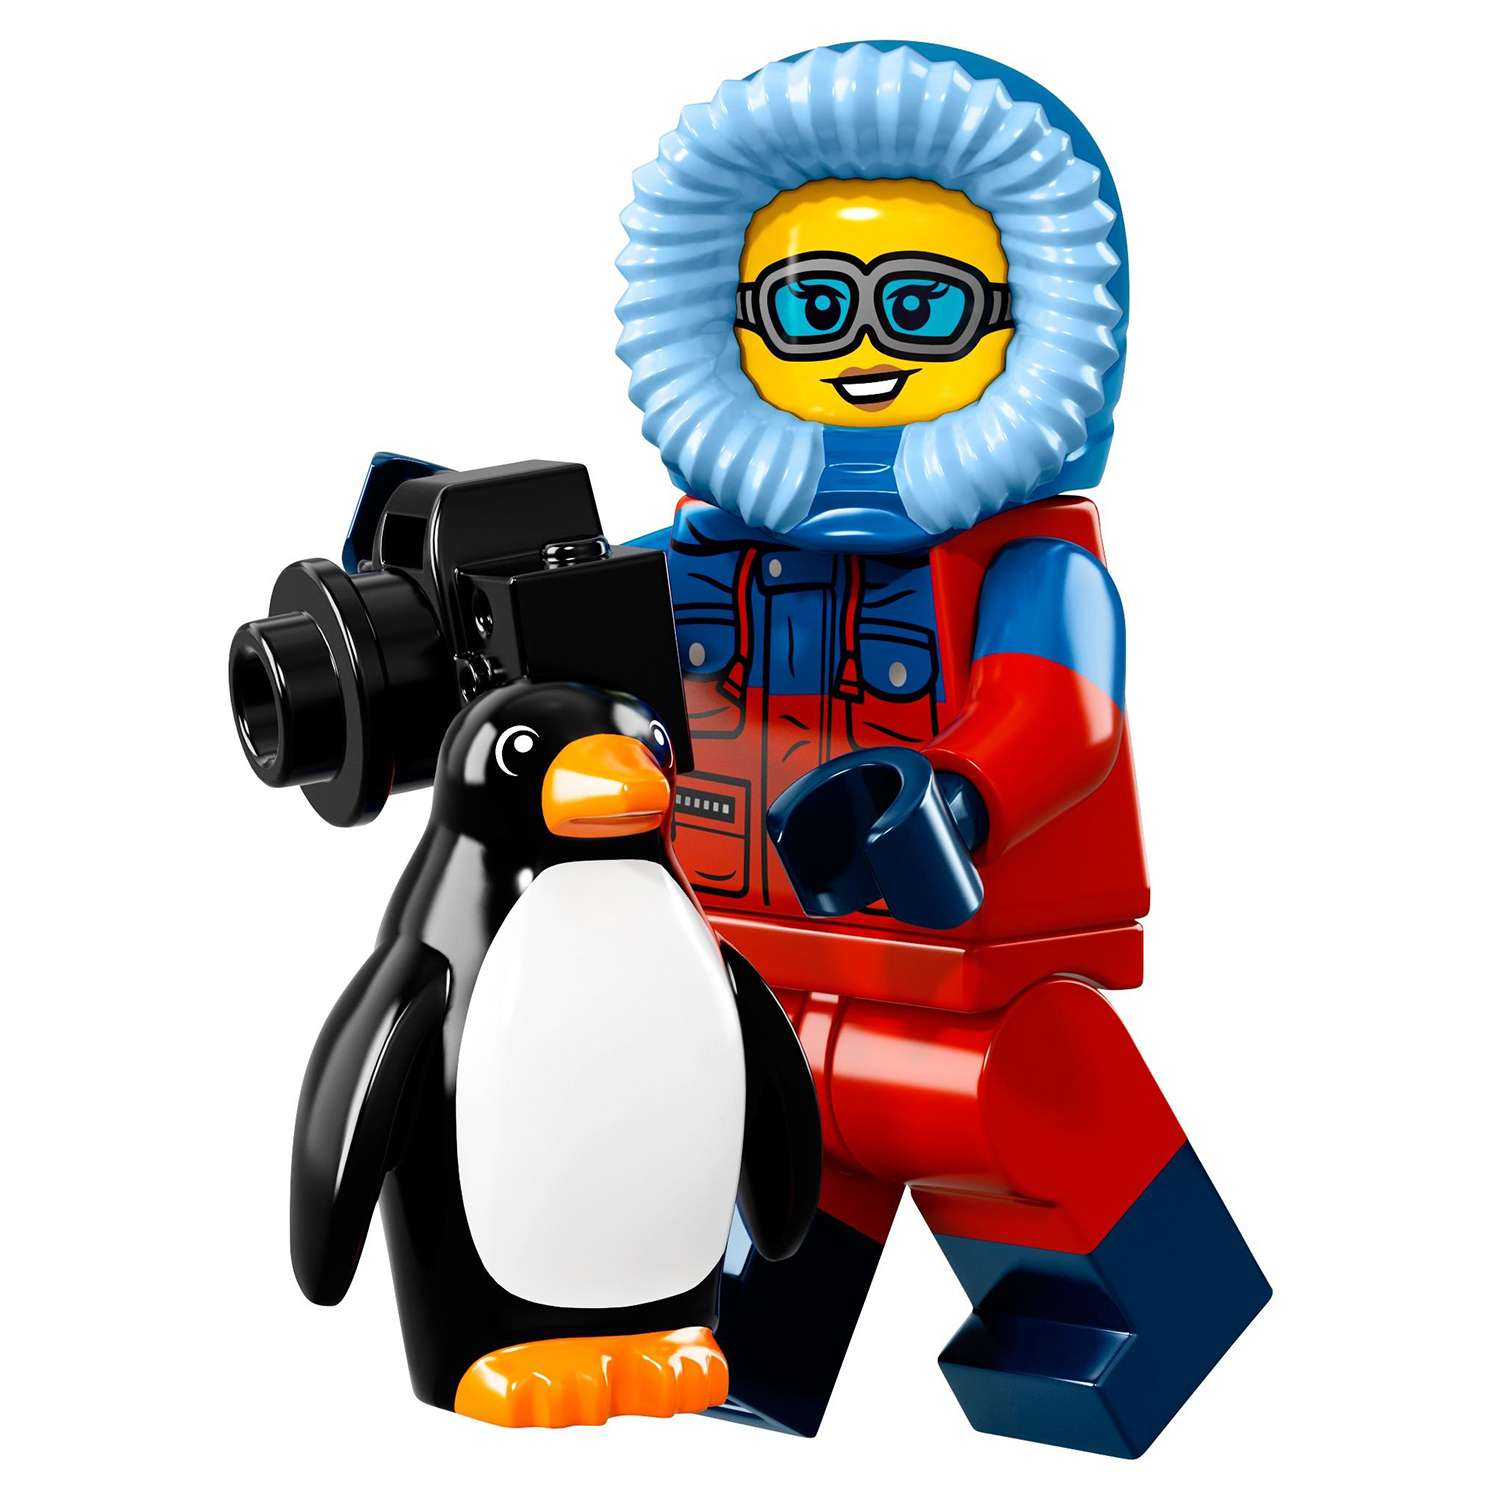 Конструктор LEGO Minifigures Confidential Minifigures Sept. 2016 (71013) - фото 45